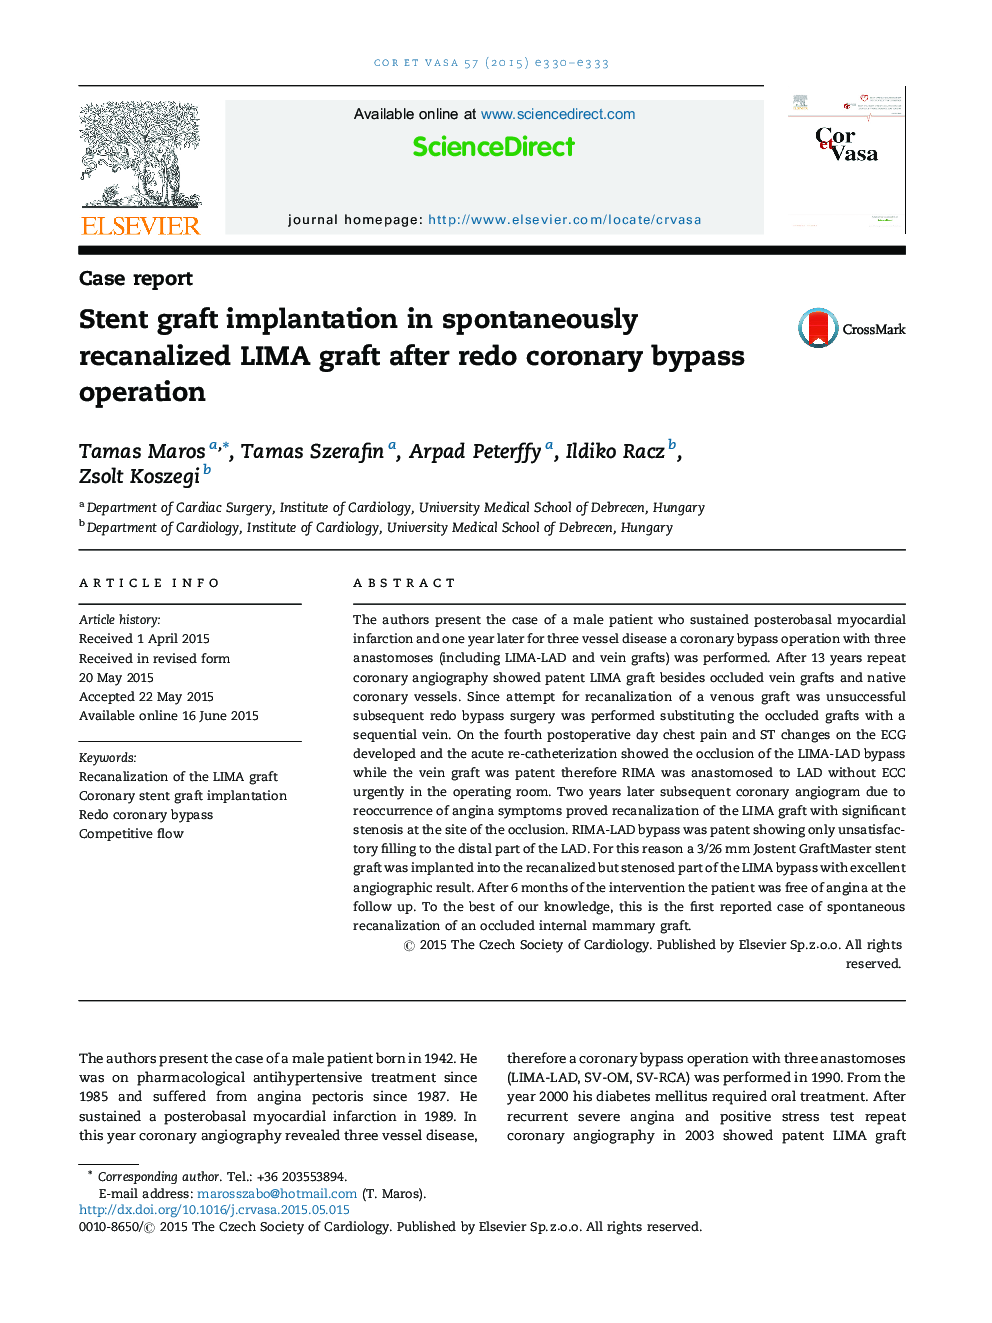 Stent graft implantation in spontaneously recanalized LIMA graft after redo coronary bypass operation